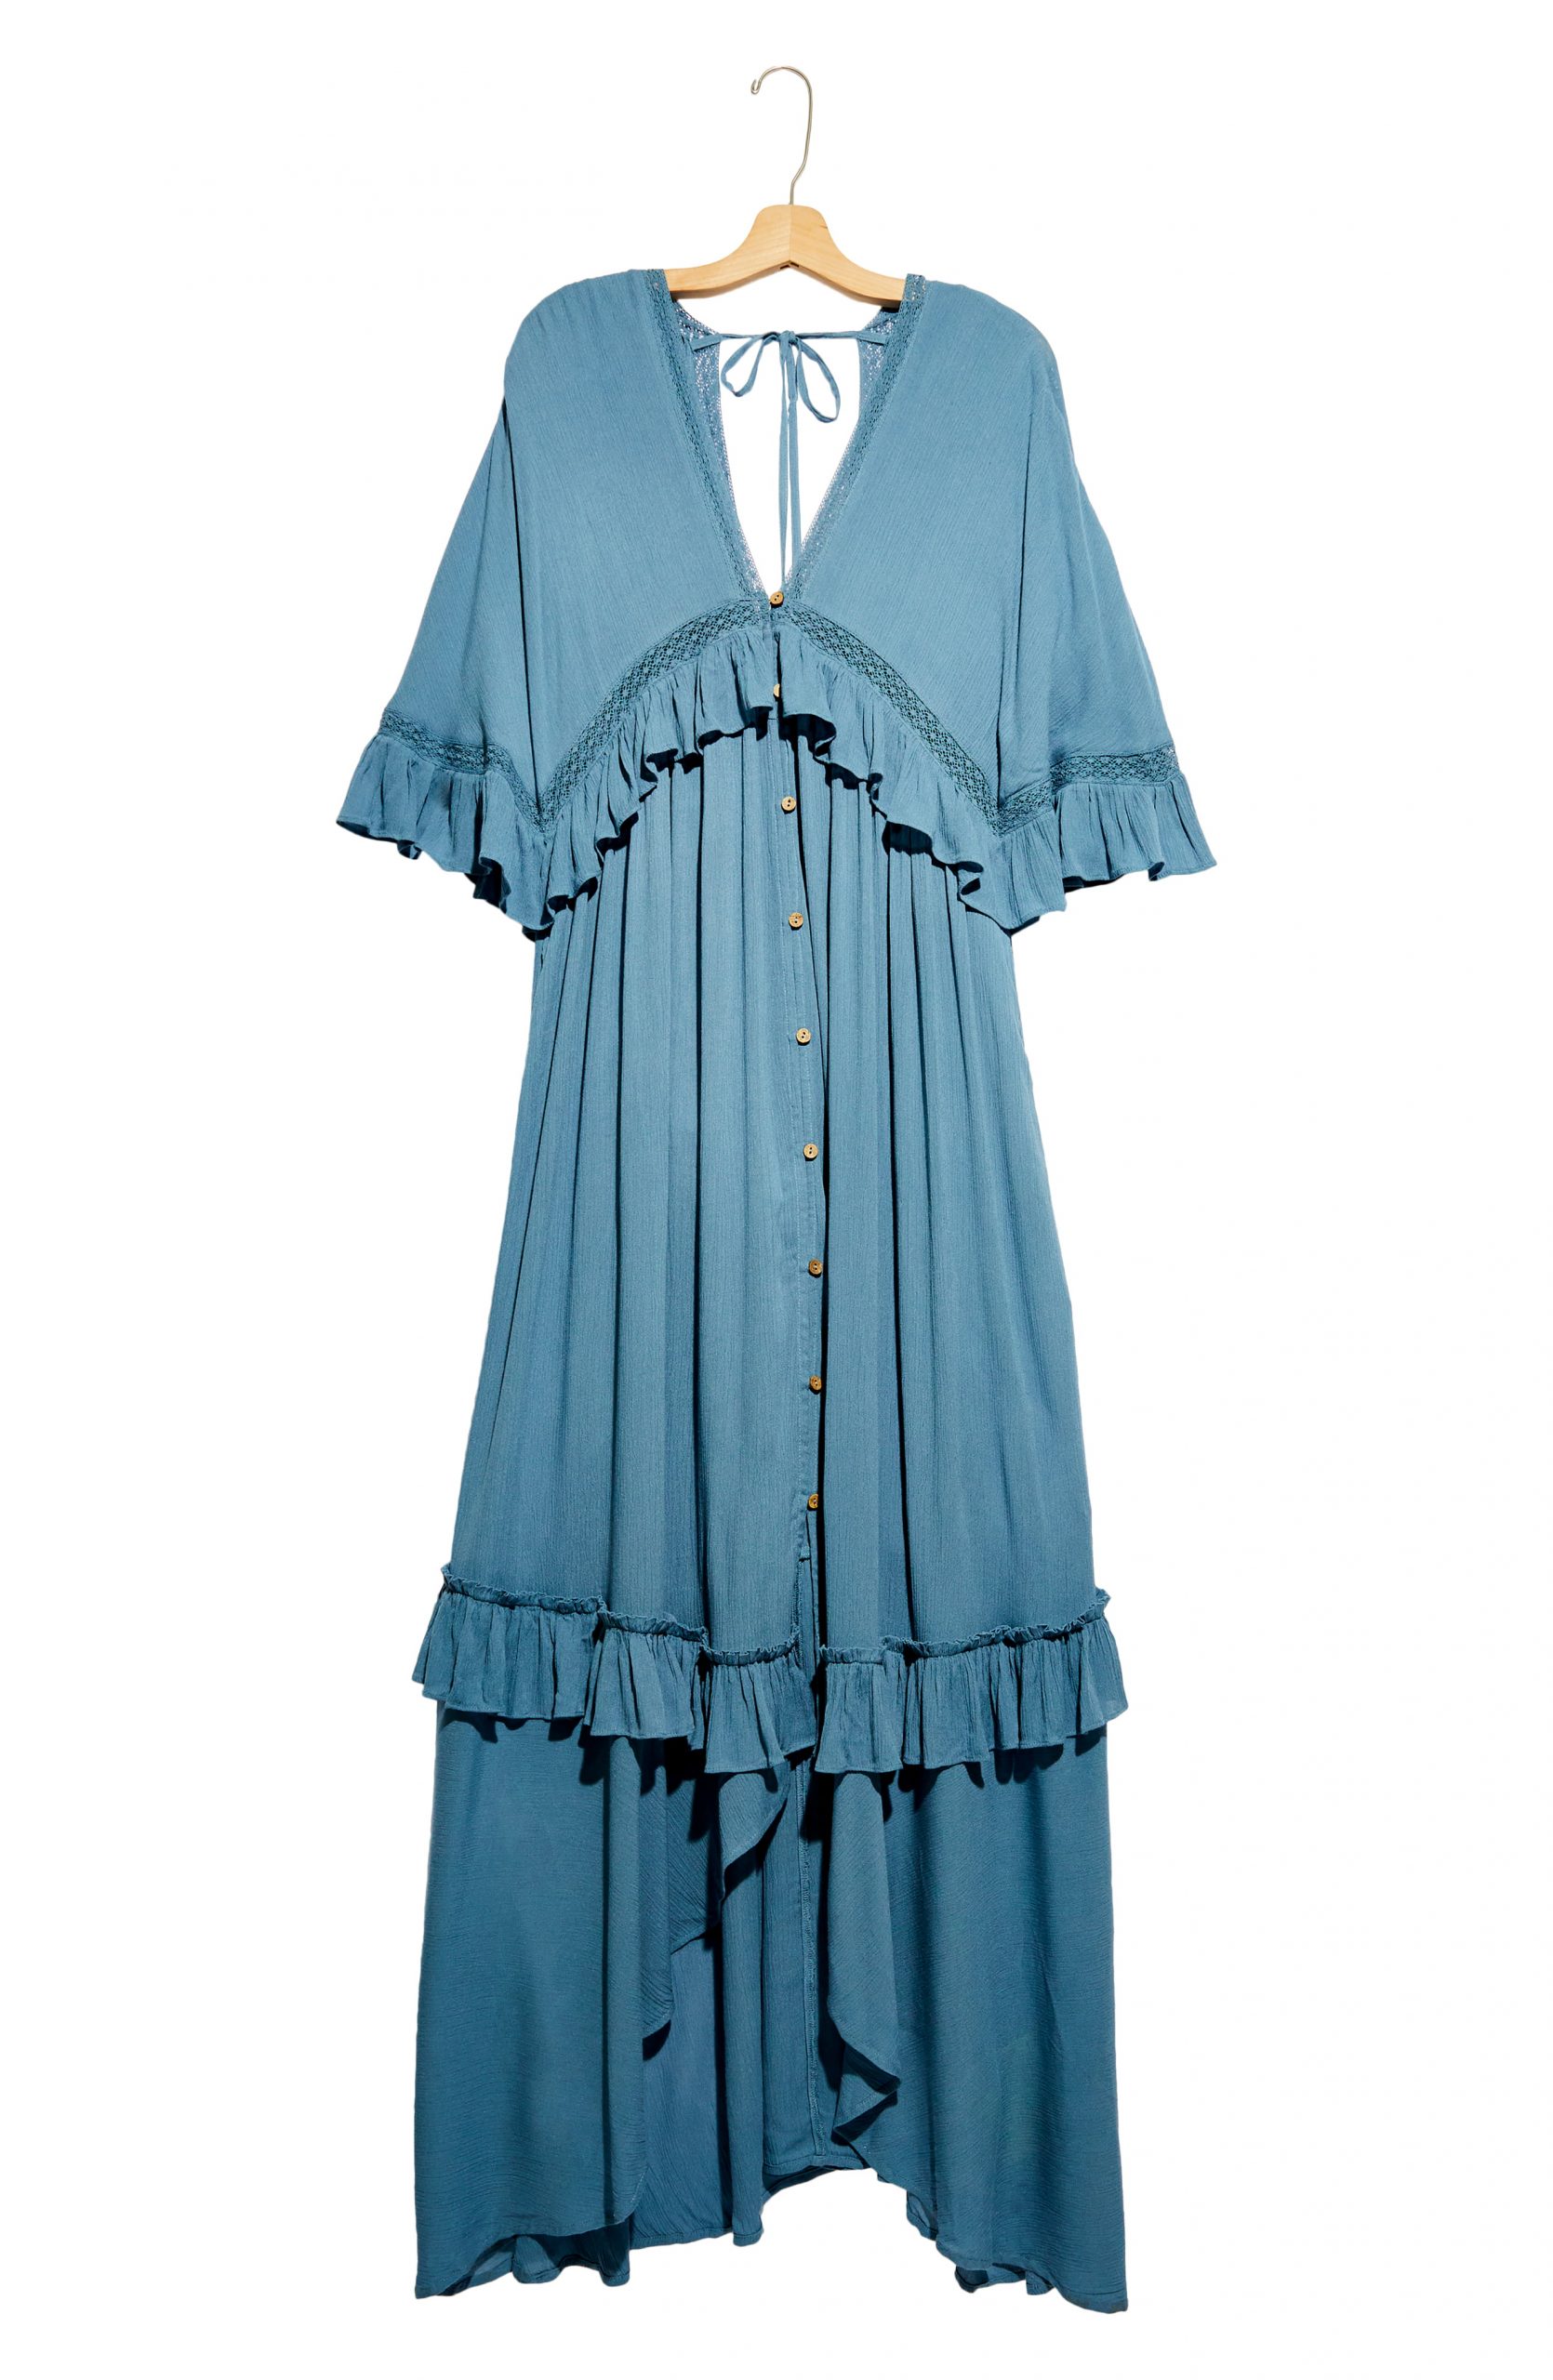 Women’s Free People Paradiso Maxi Dress, Size X-Small - Blue | Fashion ...